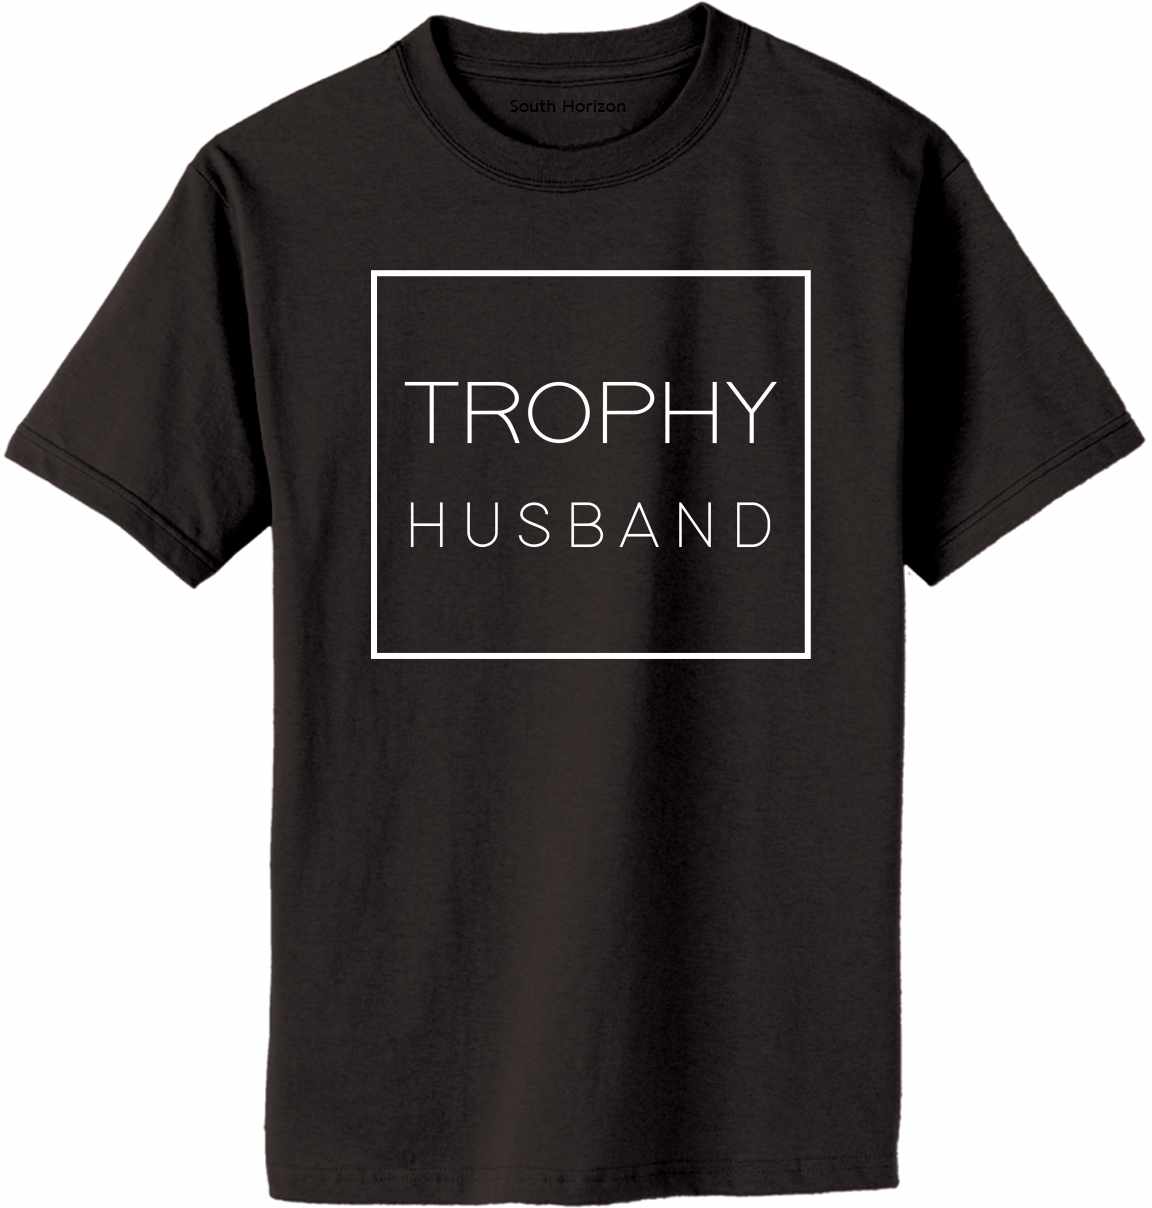 Trophy Husband - Box on Adult T-Shirt (#1347-1)